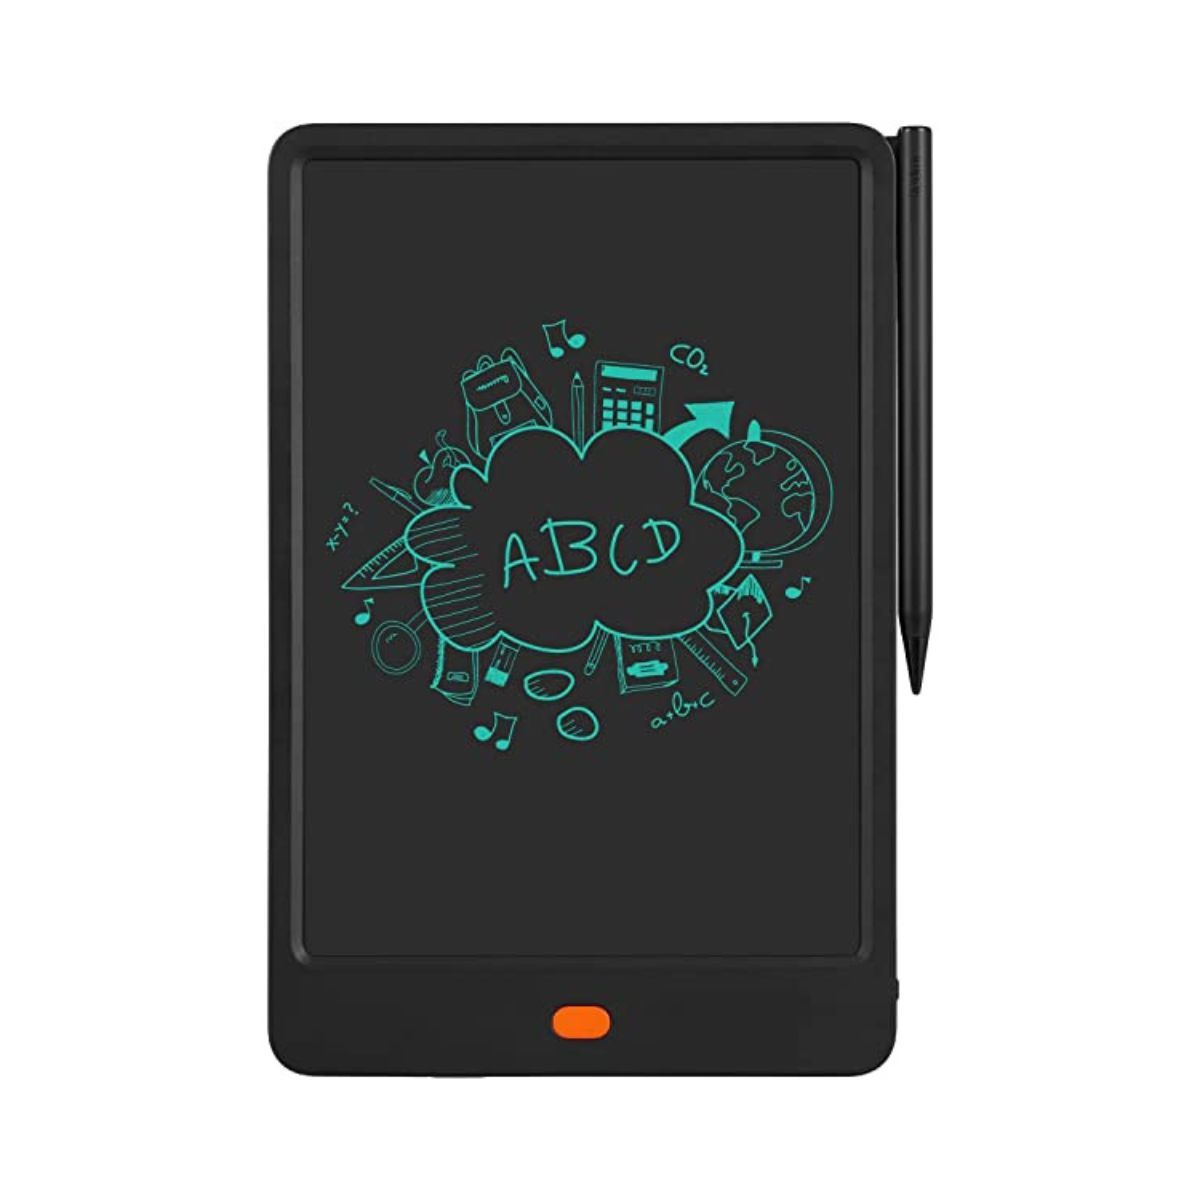 Redmi LCD Writing Pad with Stylus - Black